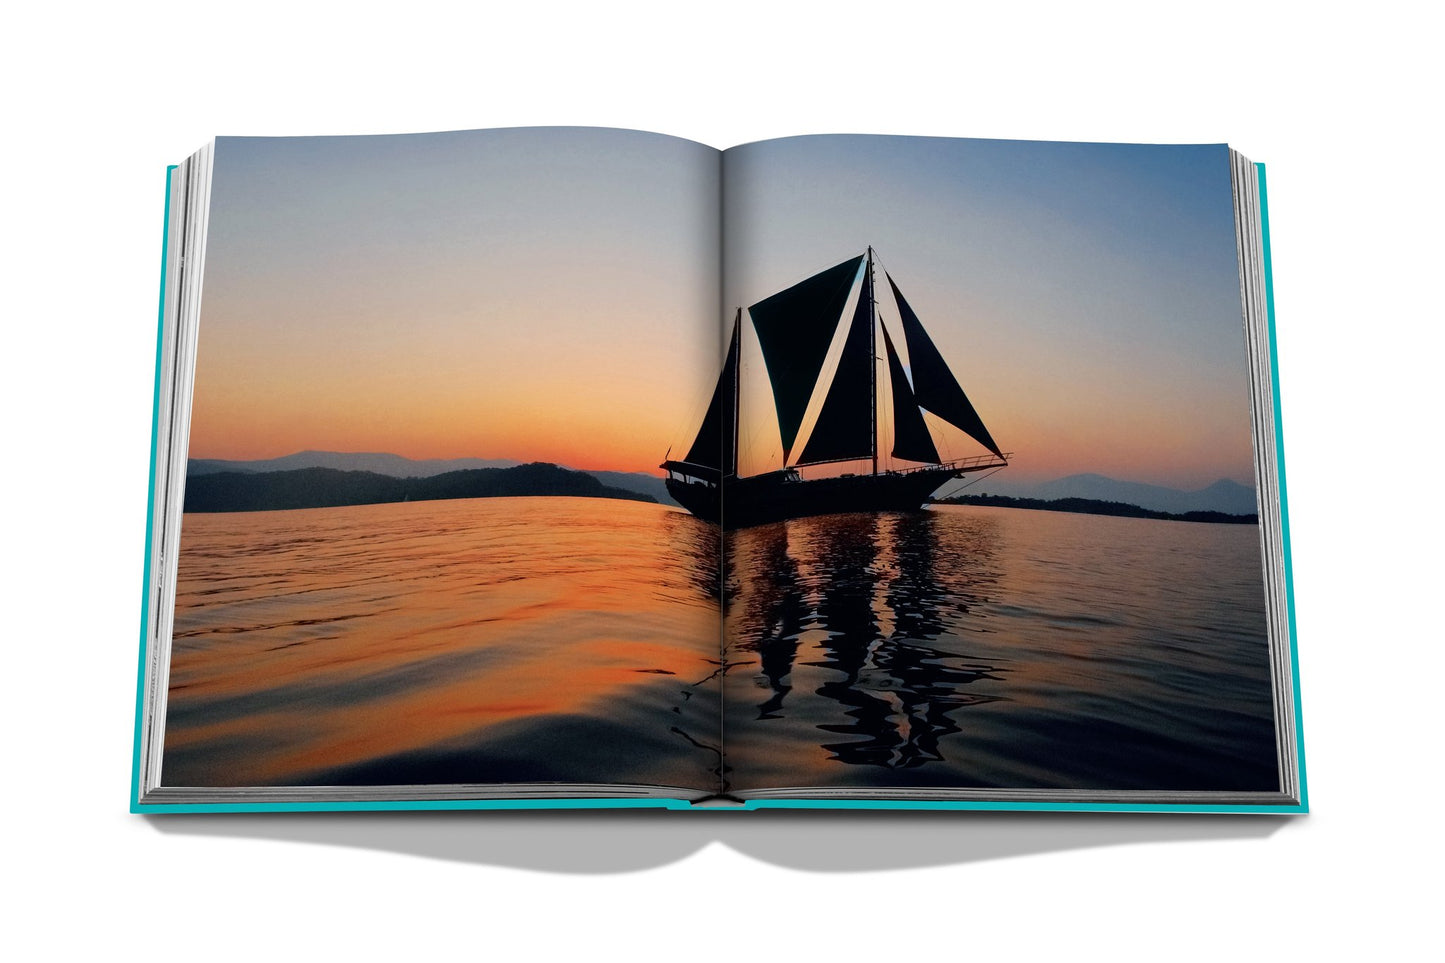 Turquoise Coast Book | Assouline